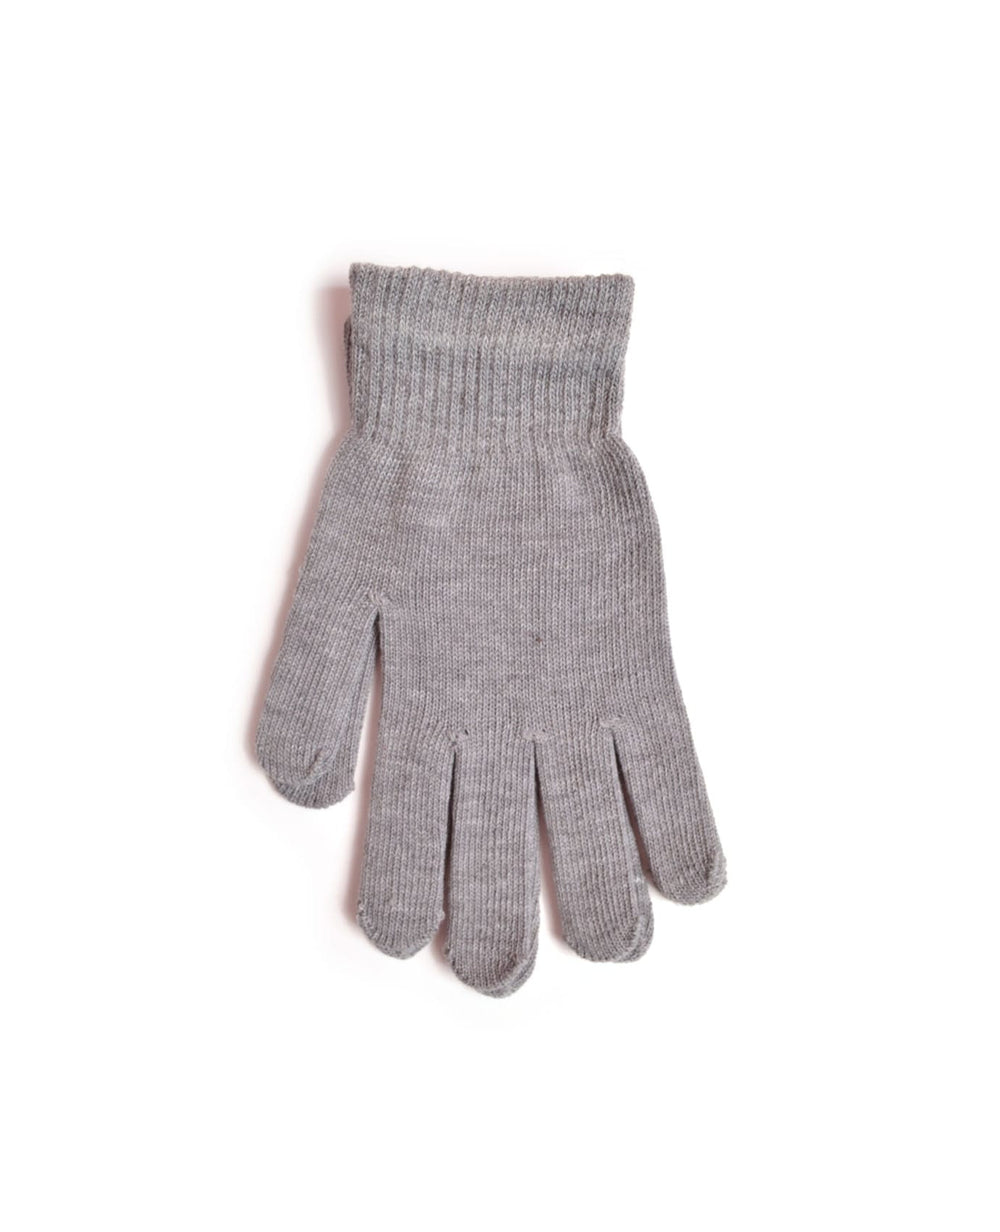  Woven Winter Gloves